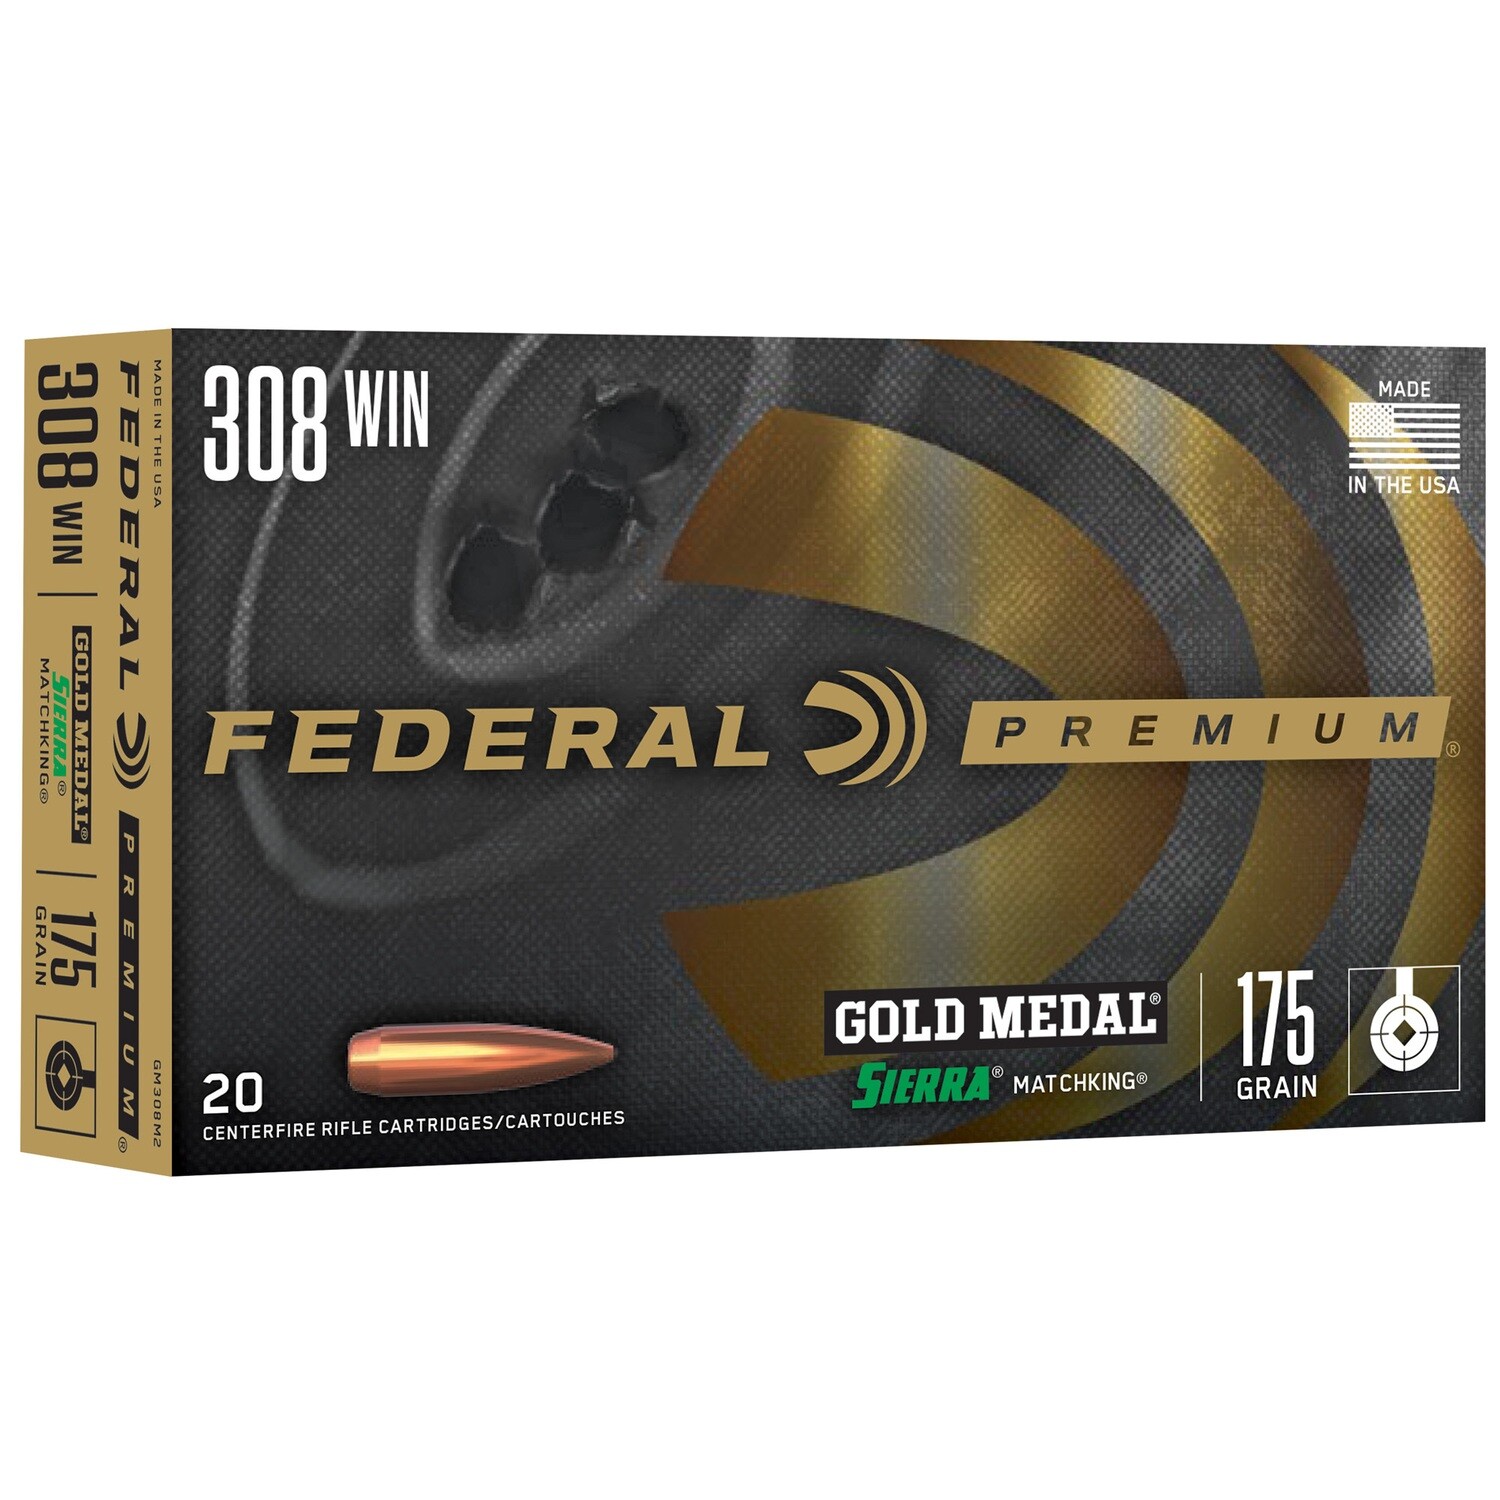 Federal Gold Medal Sierra MatchKing .308 Win 175 grain